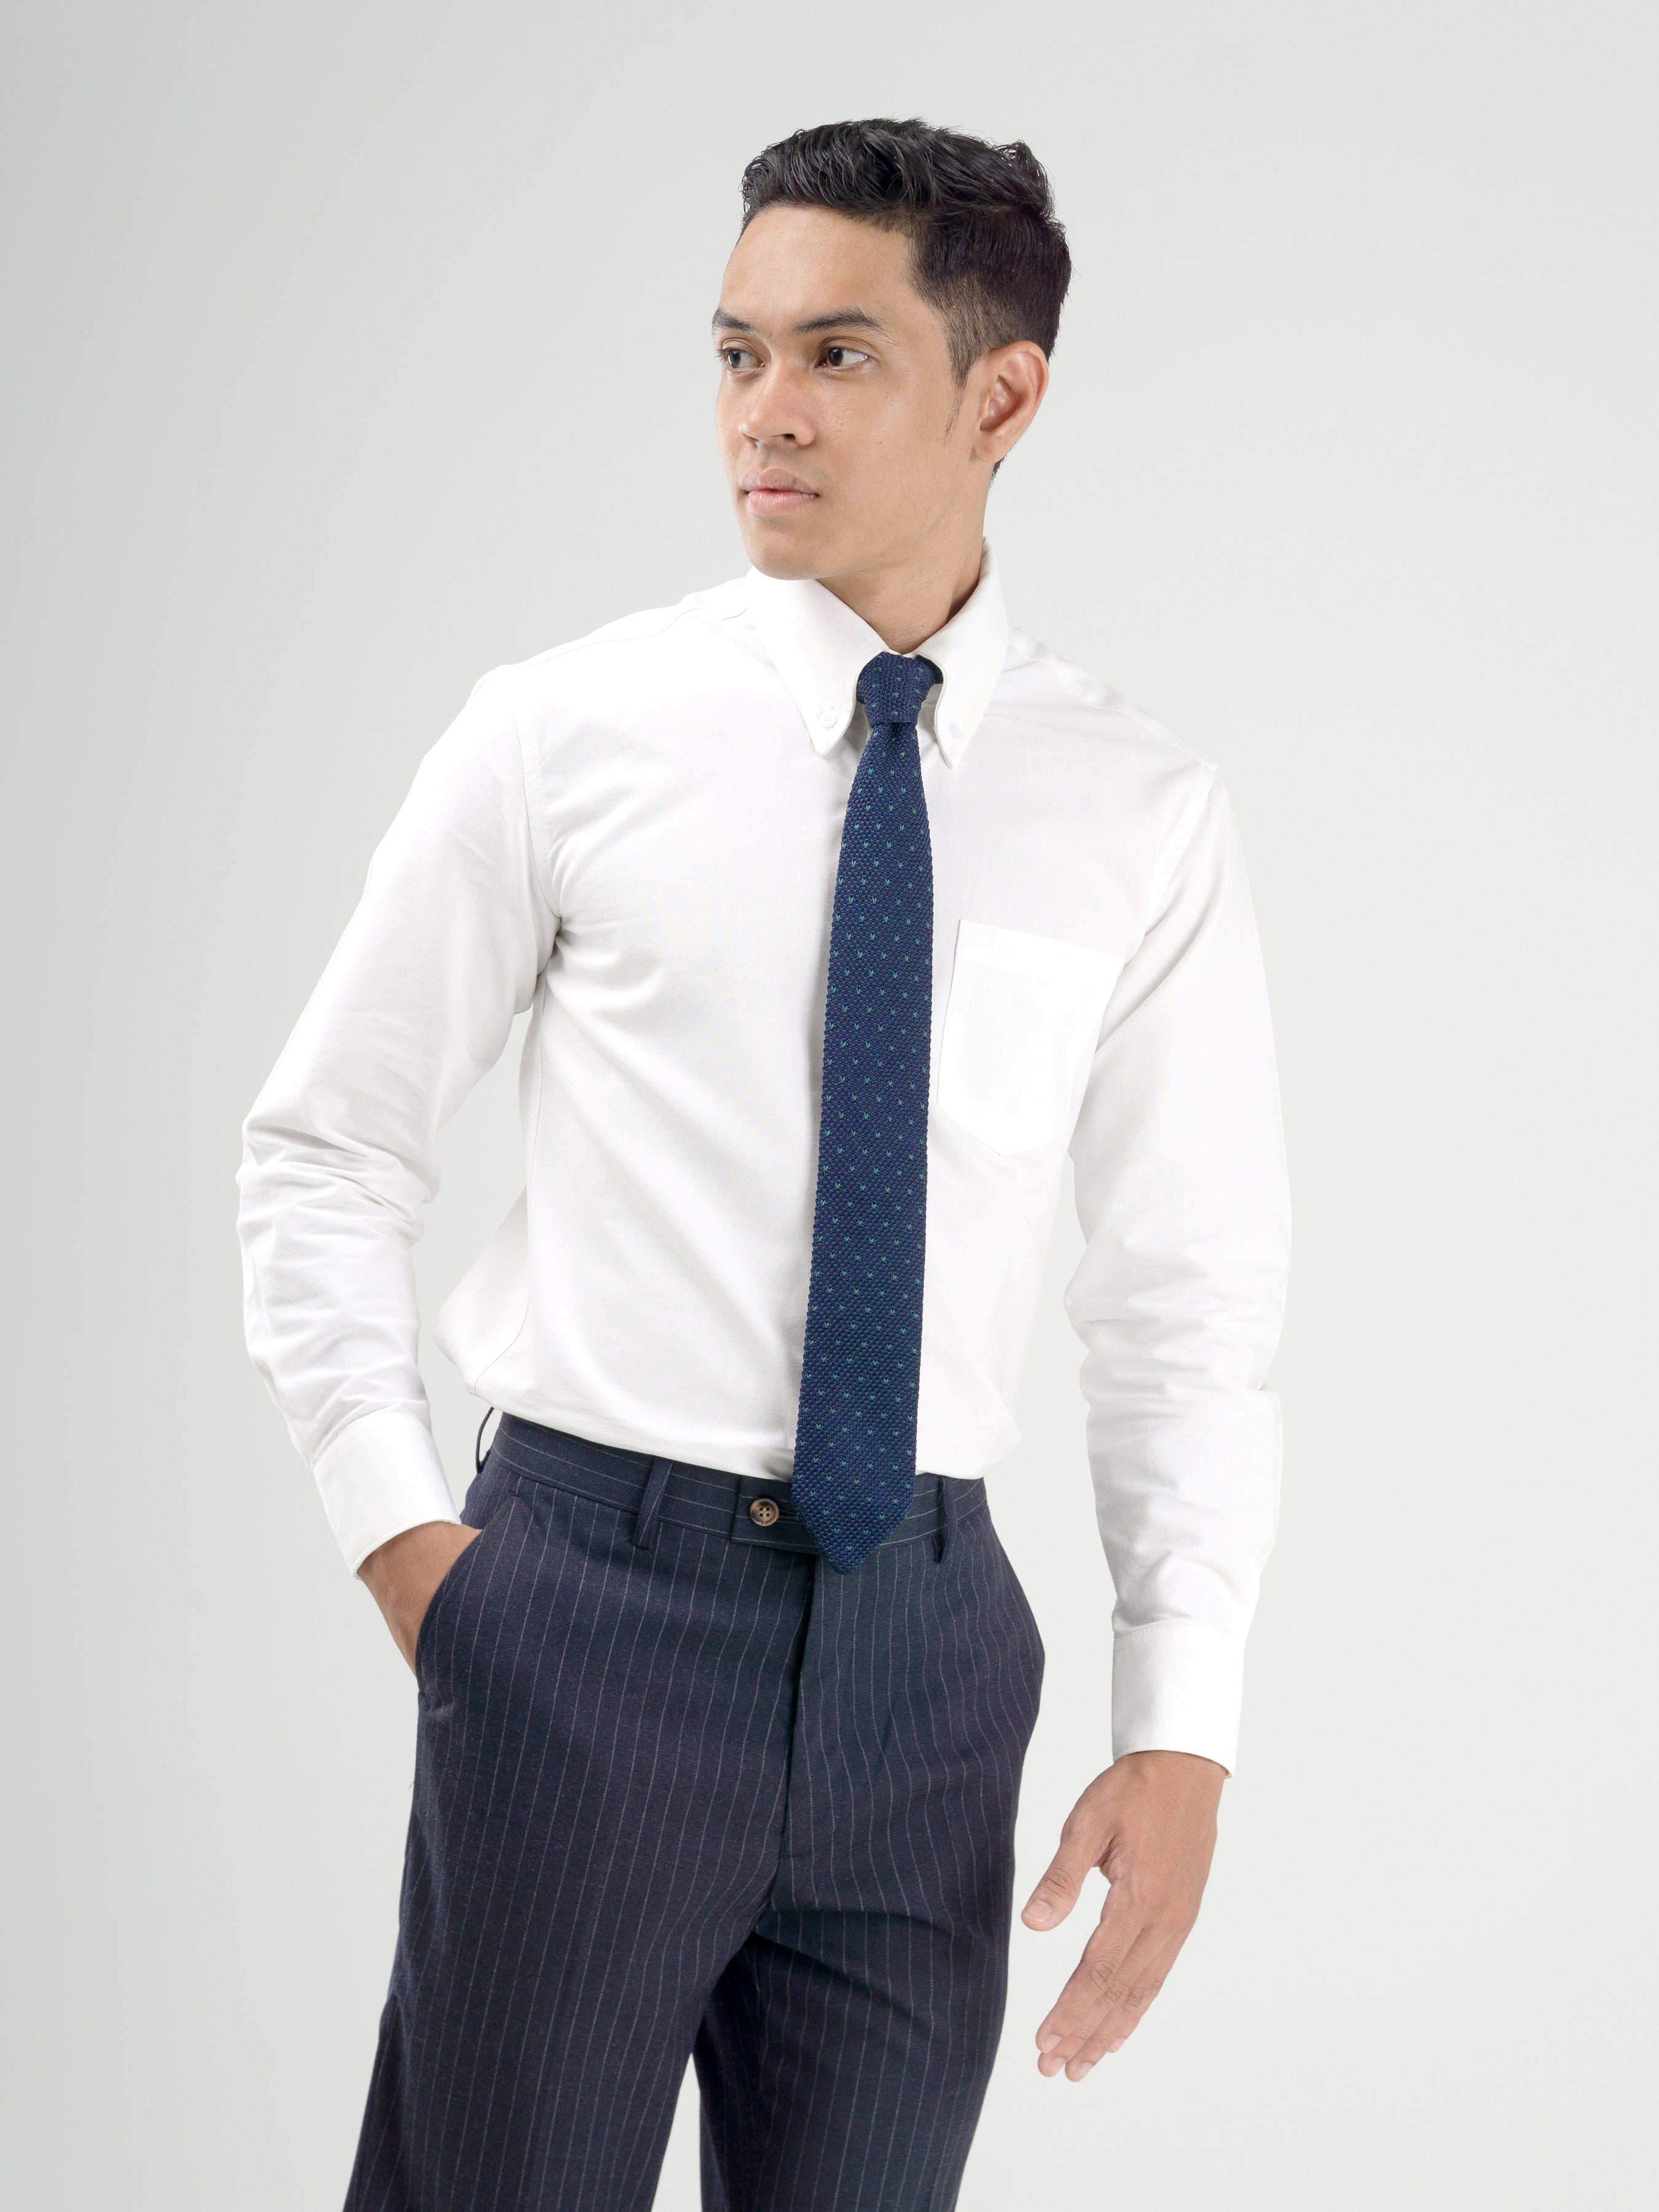 Formal Shirt - Pure White Oxford Button-Down Collar